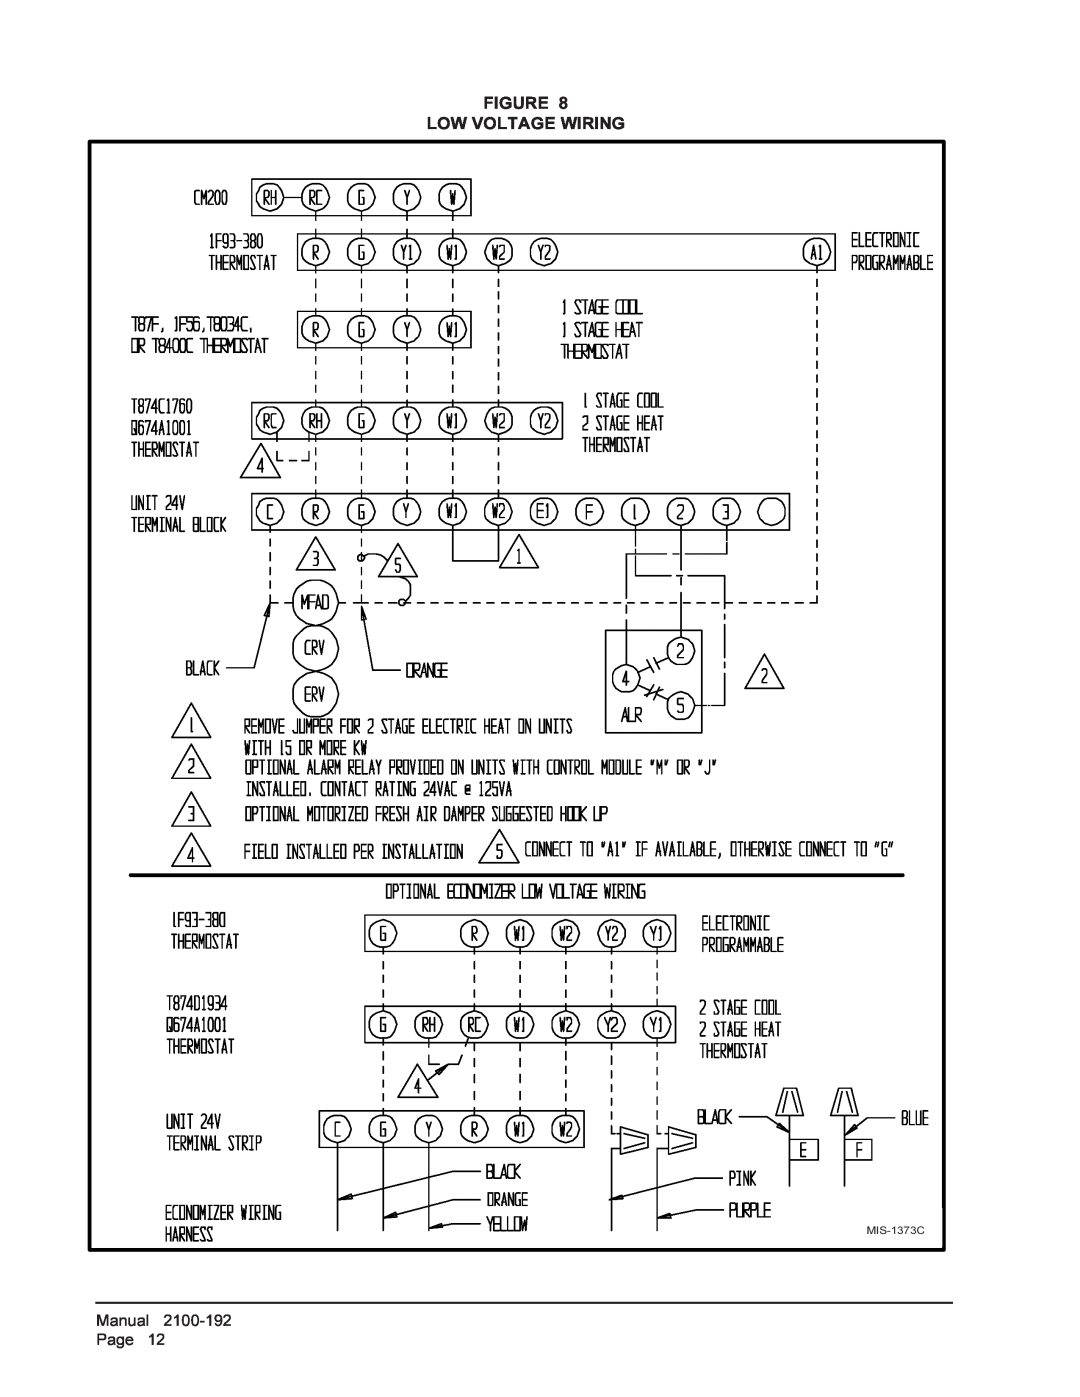 Bard WA361, WA301 installation instructions Figure Low Voltage Wiring, MIS-1373C 